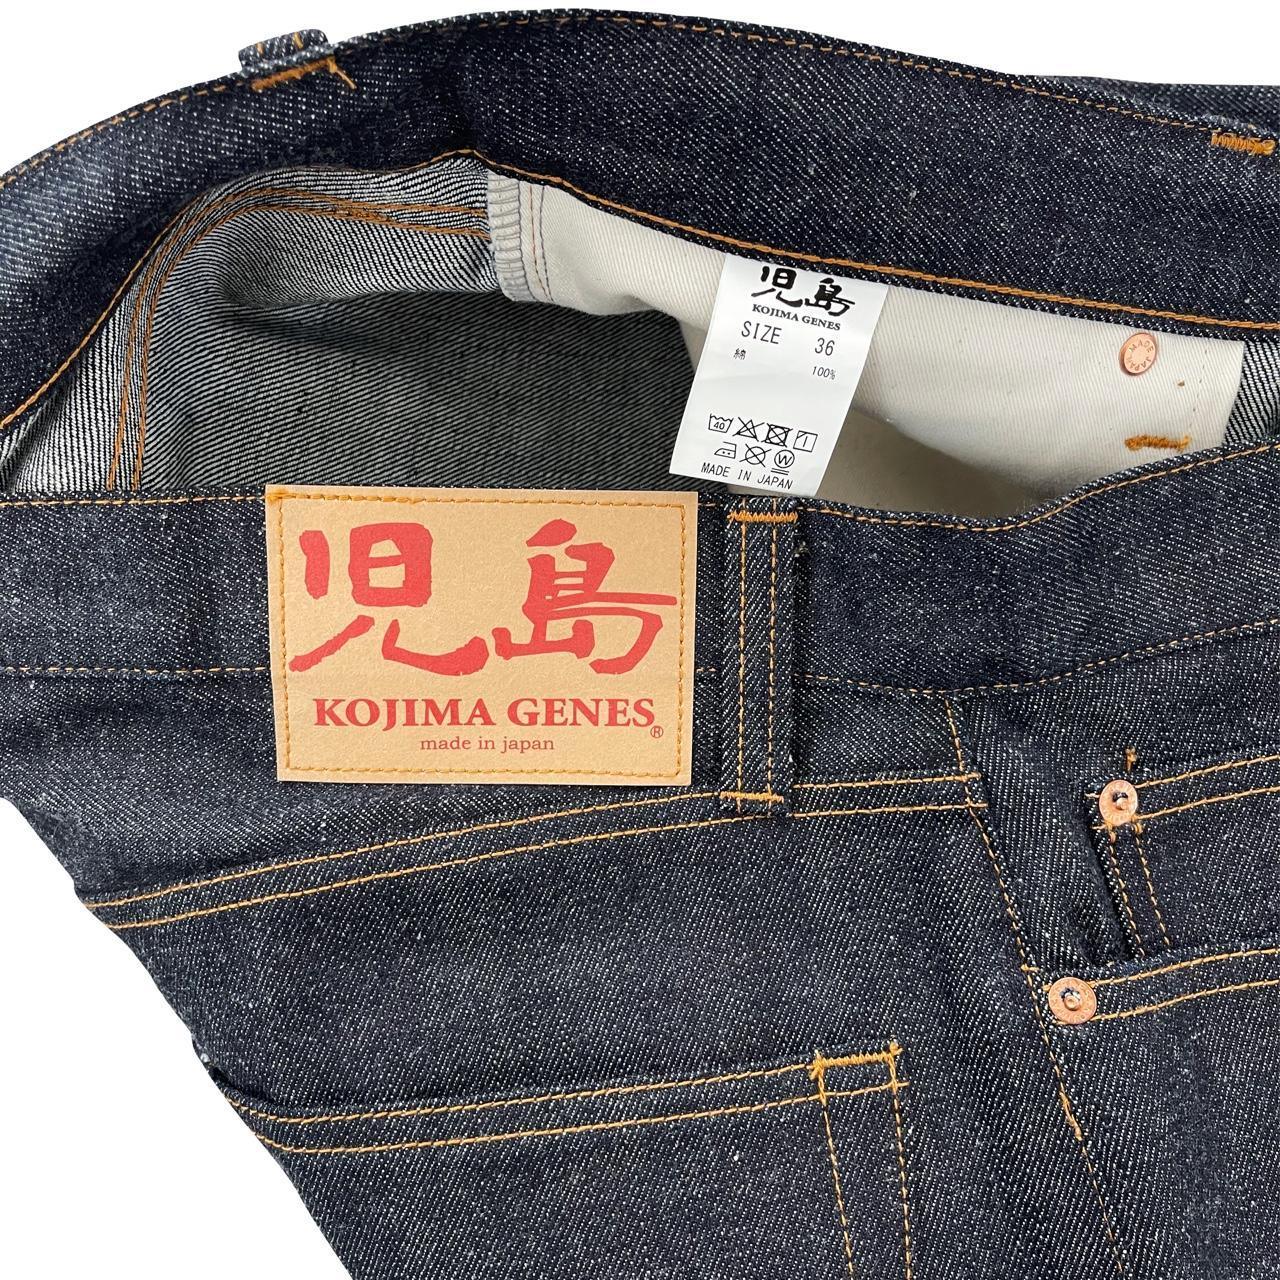 Kojima Jeans - Known Source